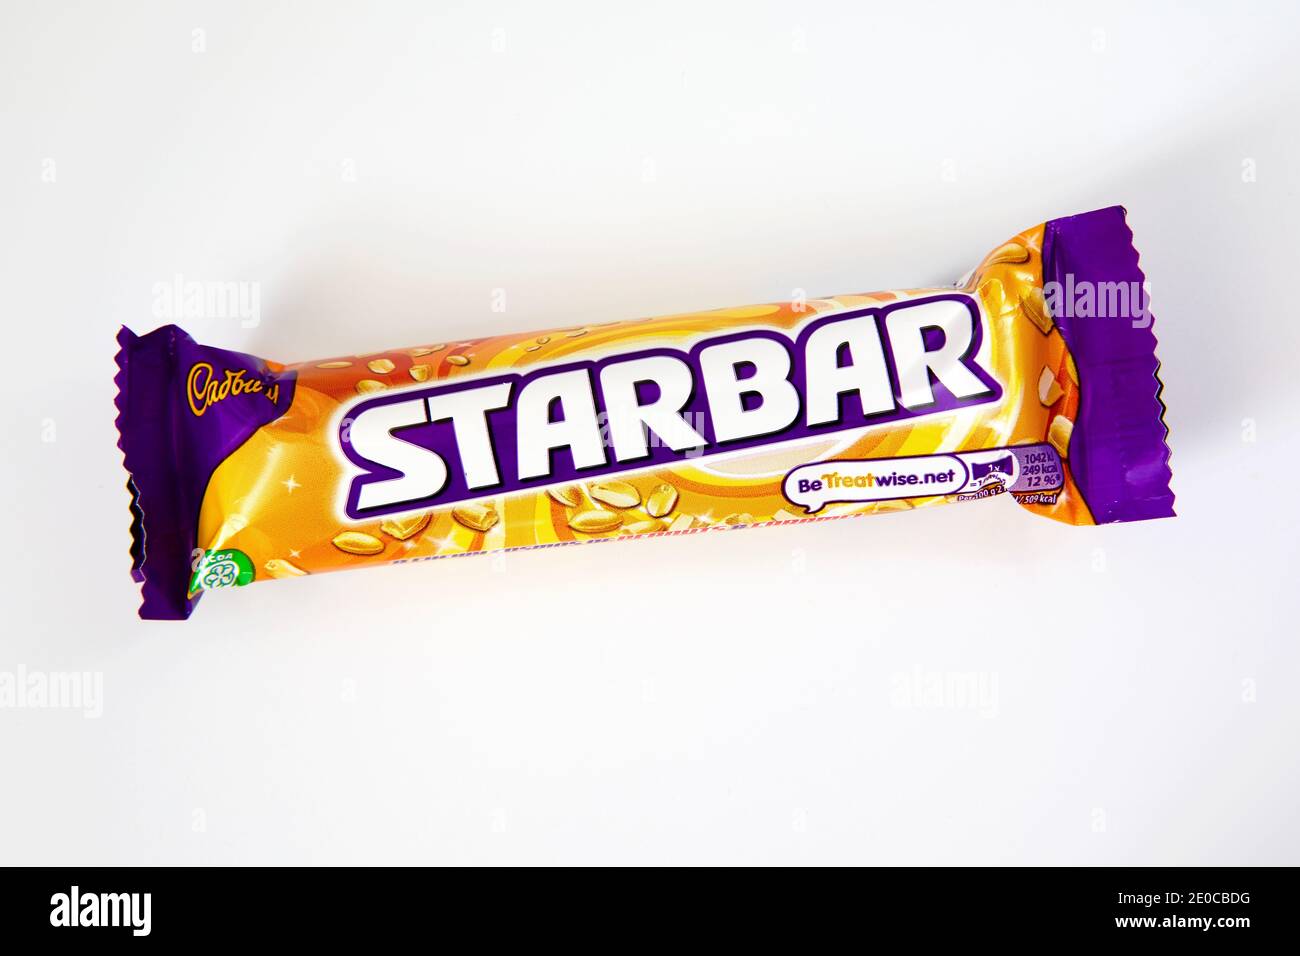 Cadbury Star Bar Stock Photo